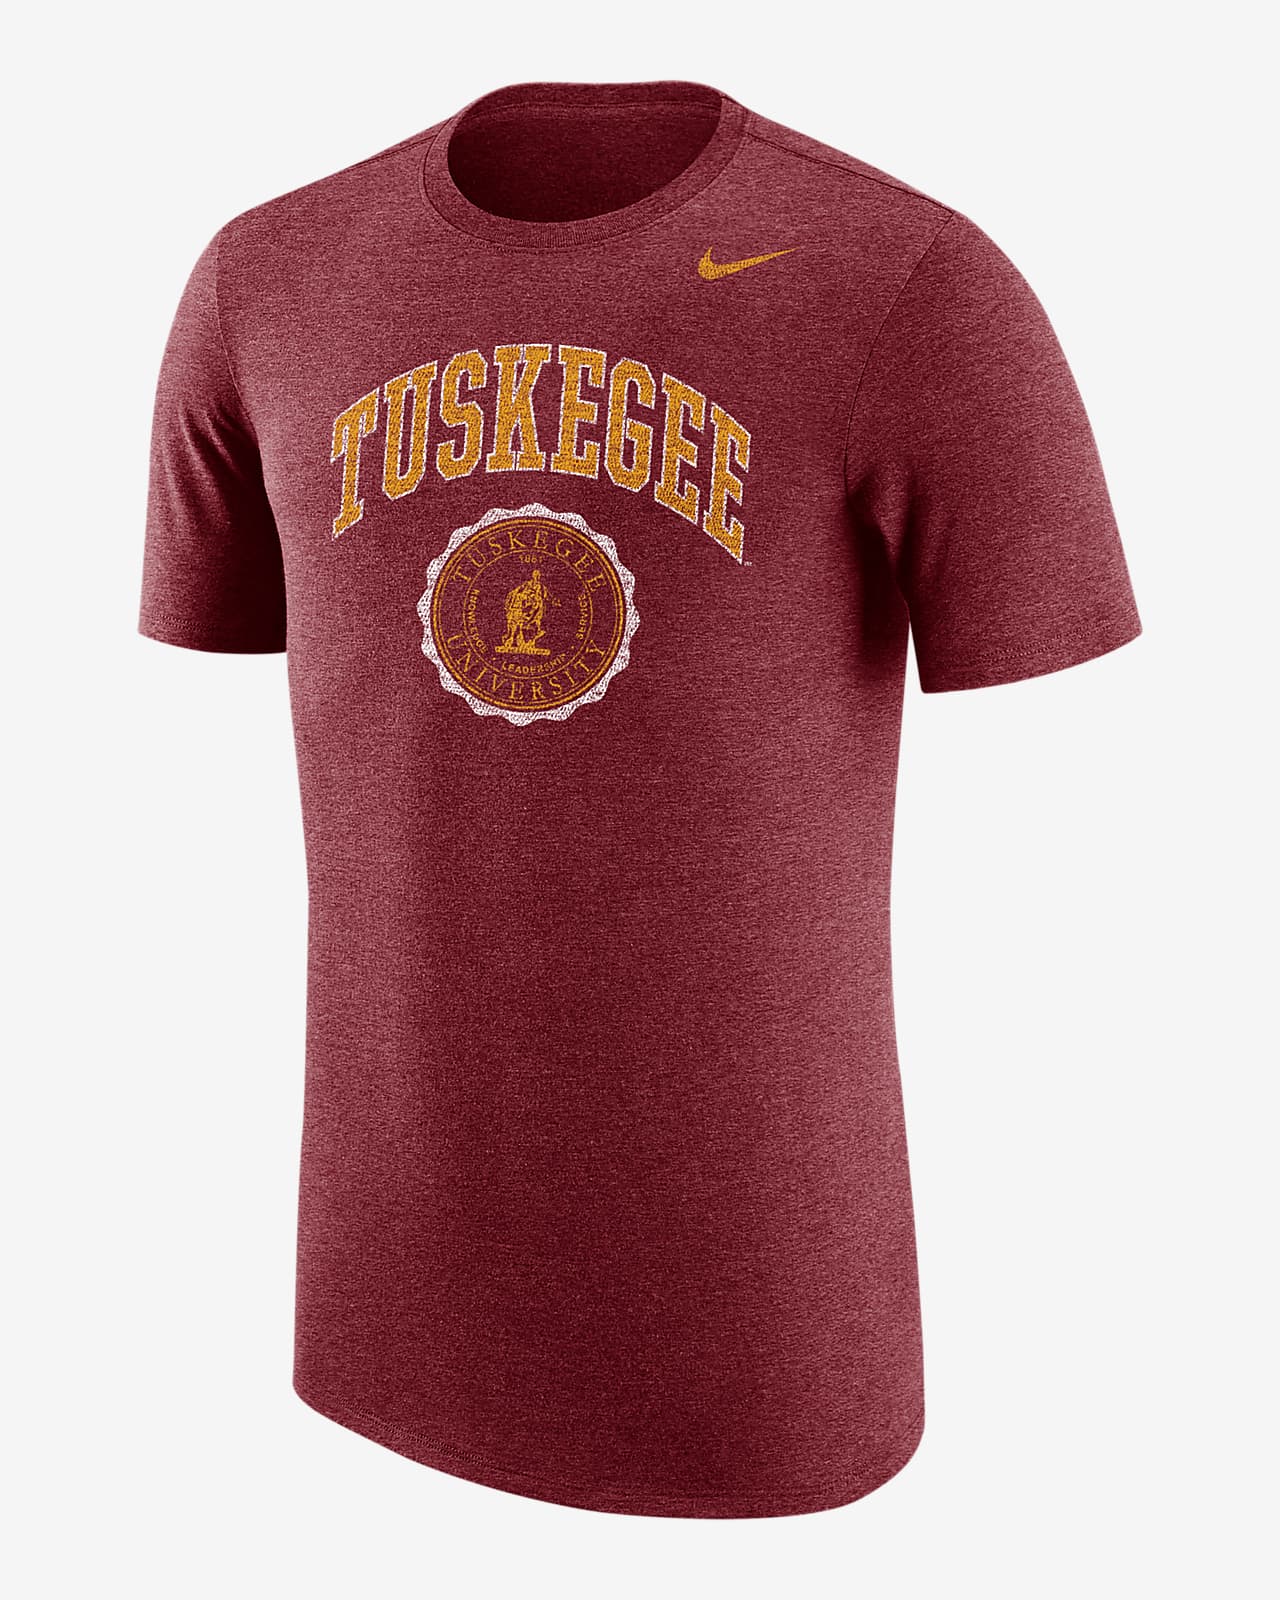 Nike College (Tuskegee) Men's T-Shirt